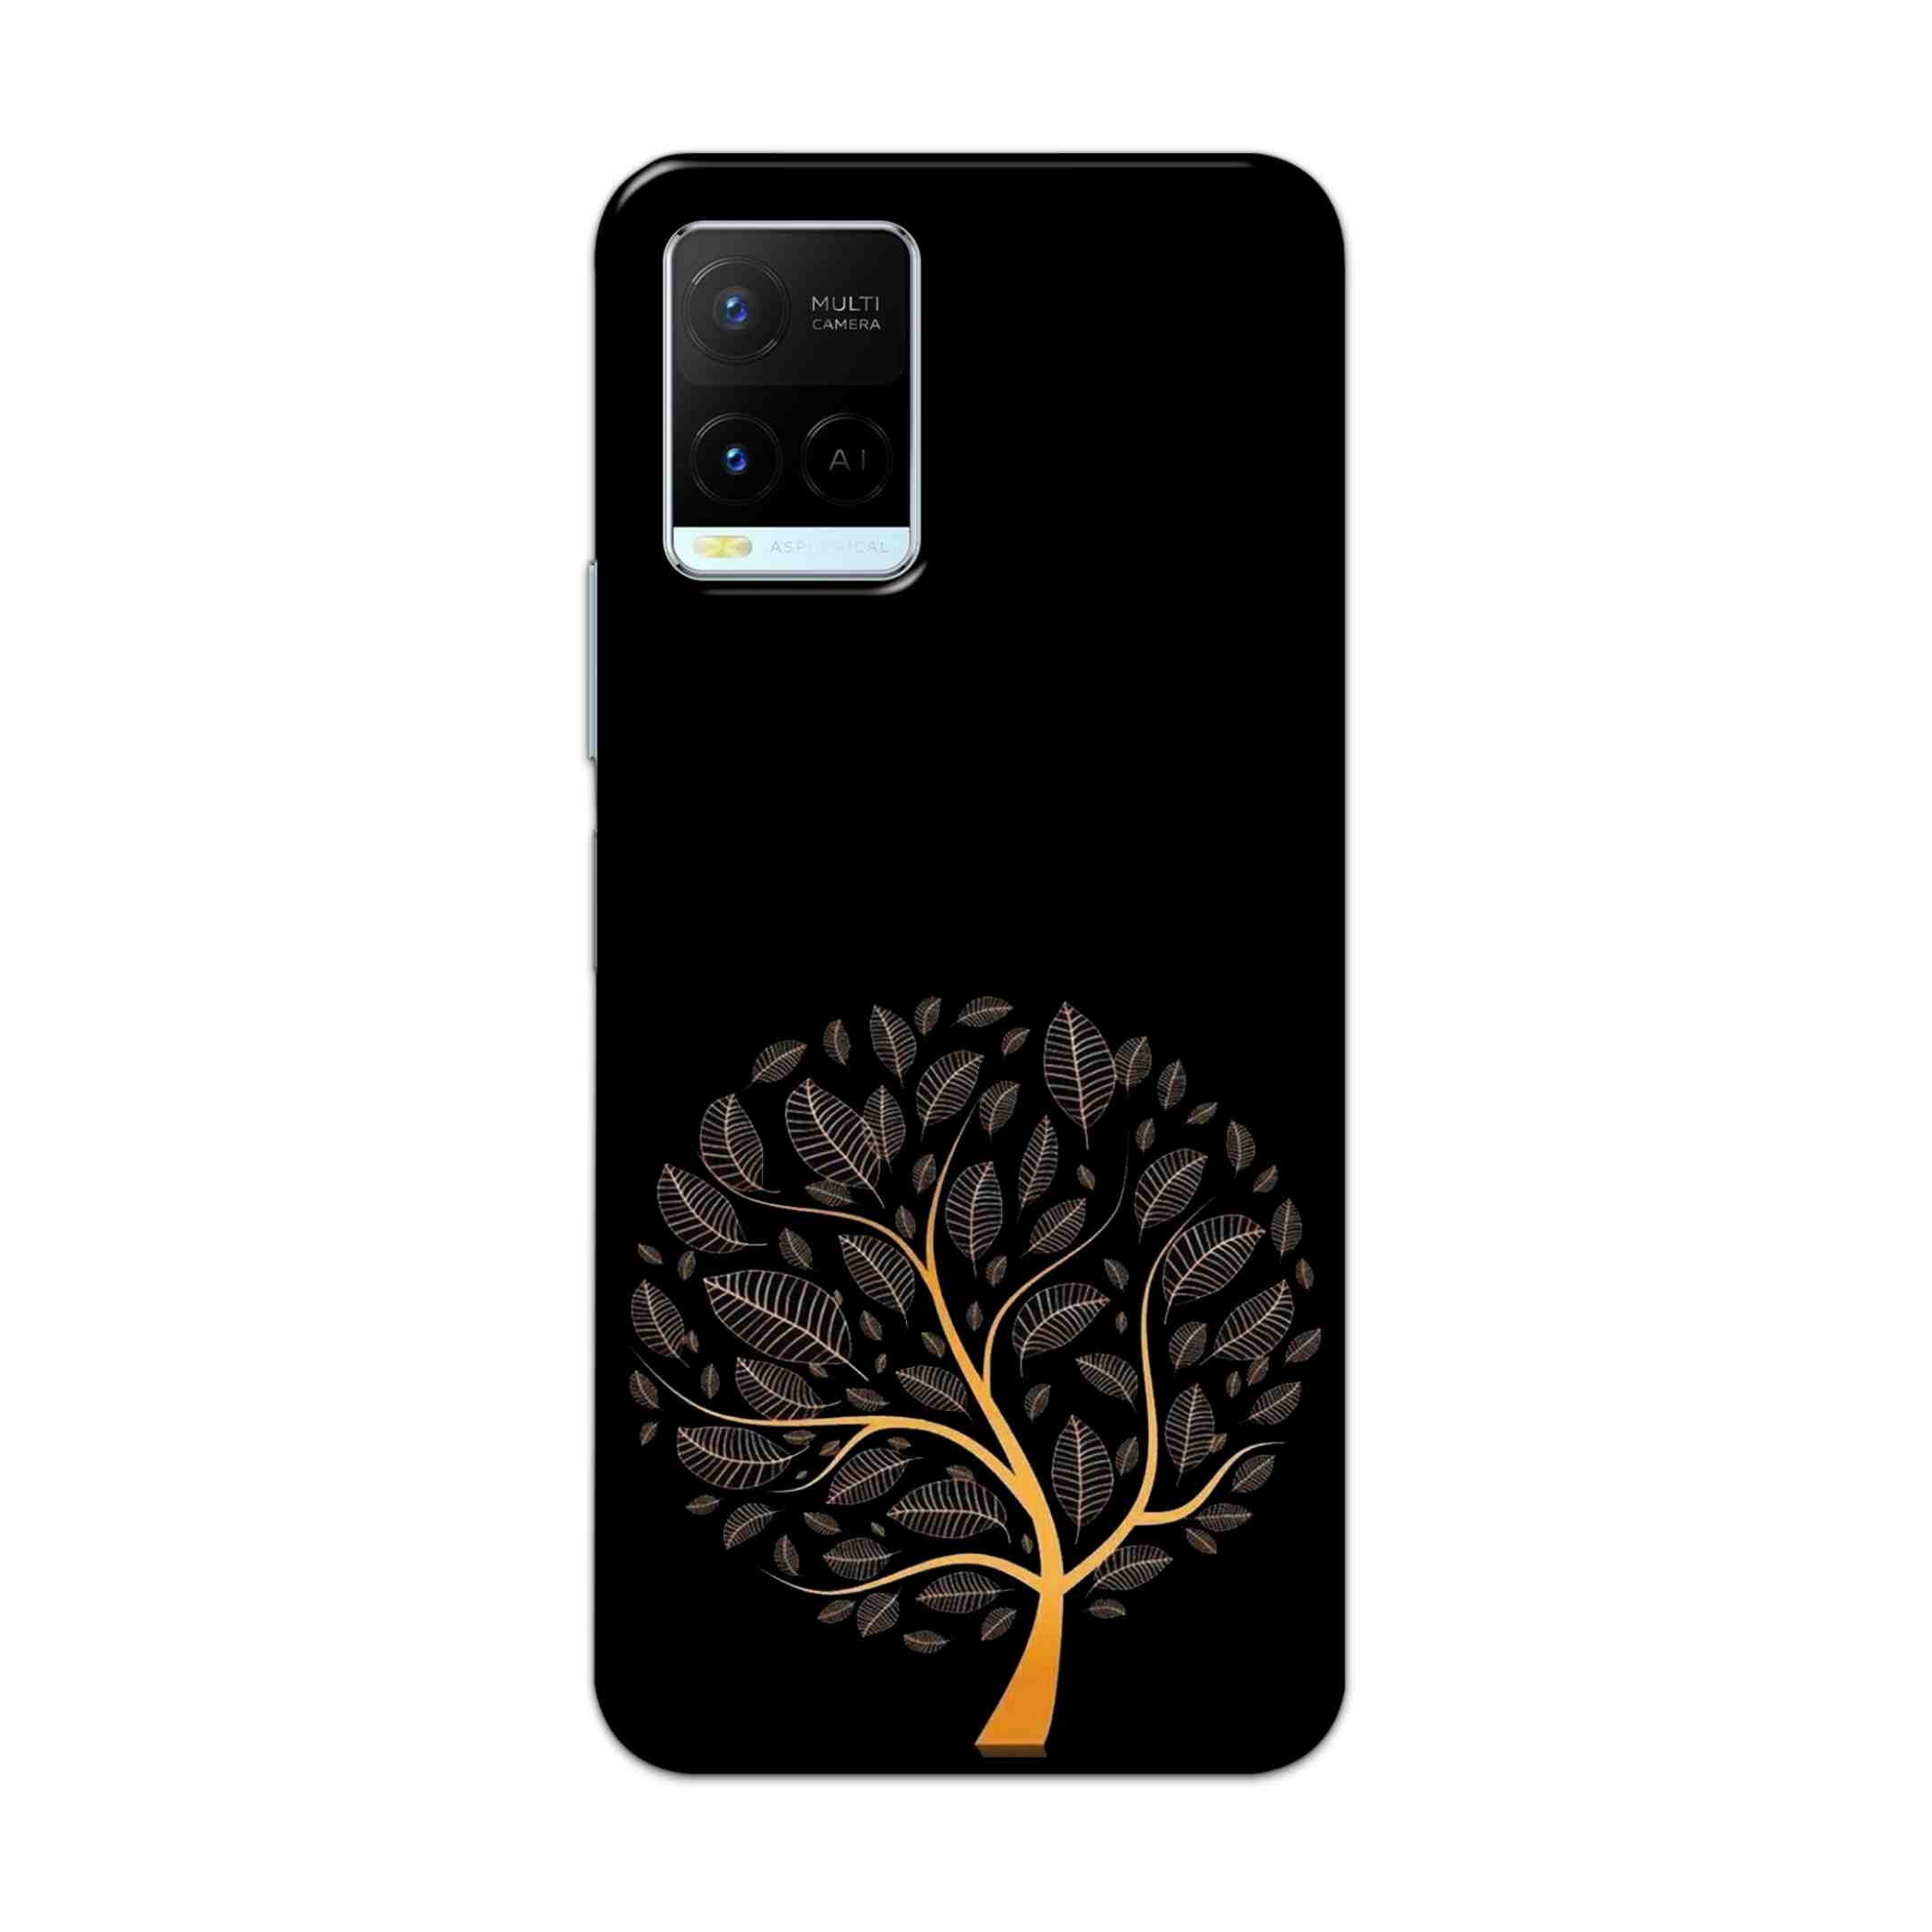 Buy Golden Tree Hard Back Mobile Phone Case Cover For Vivo Y21 2021 Online